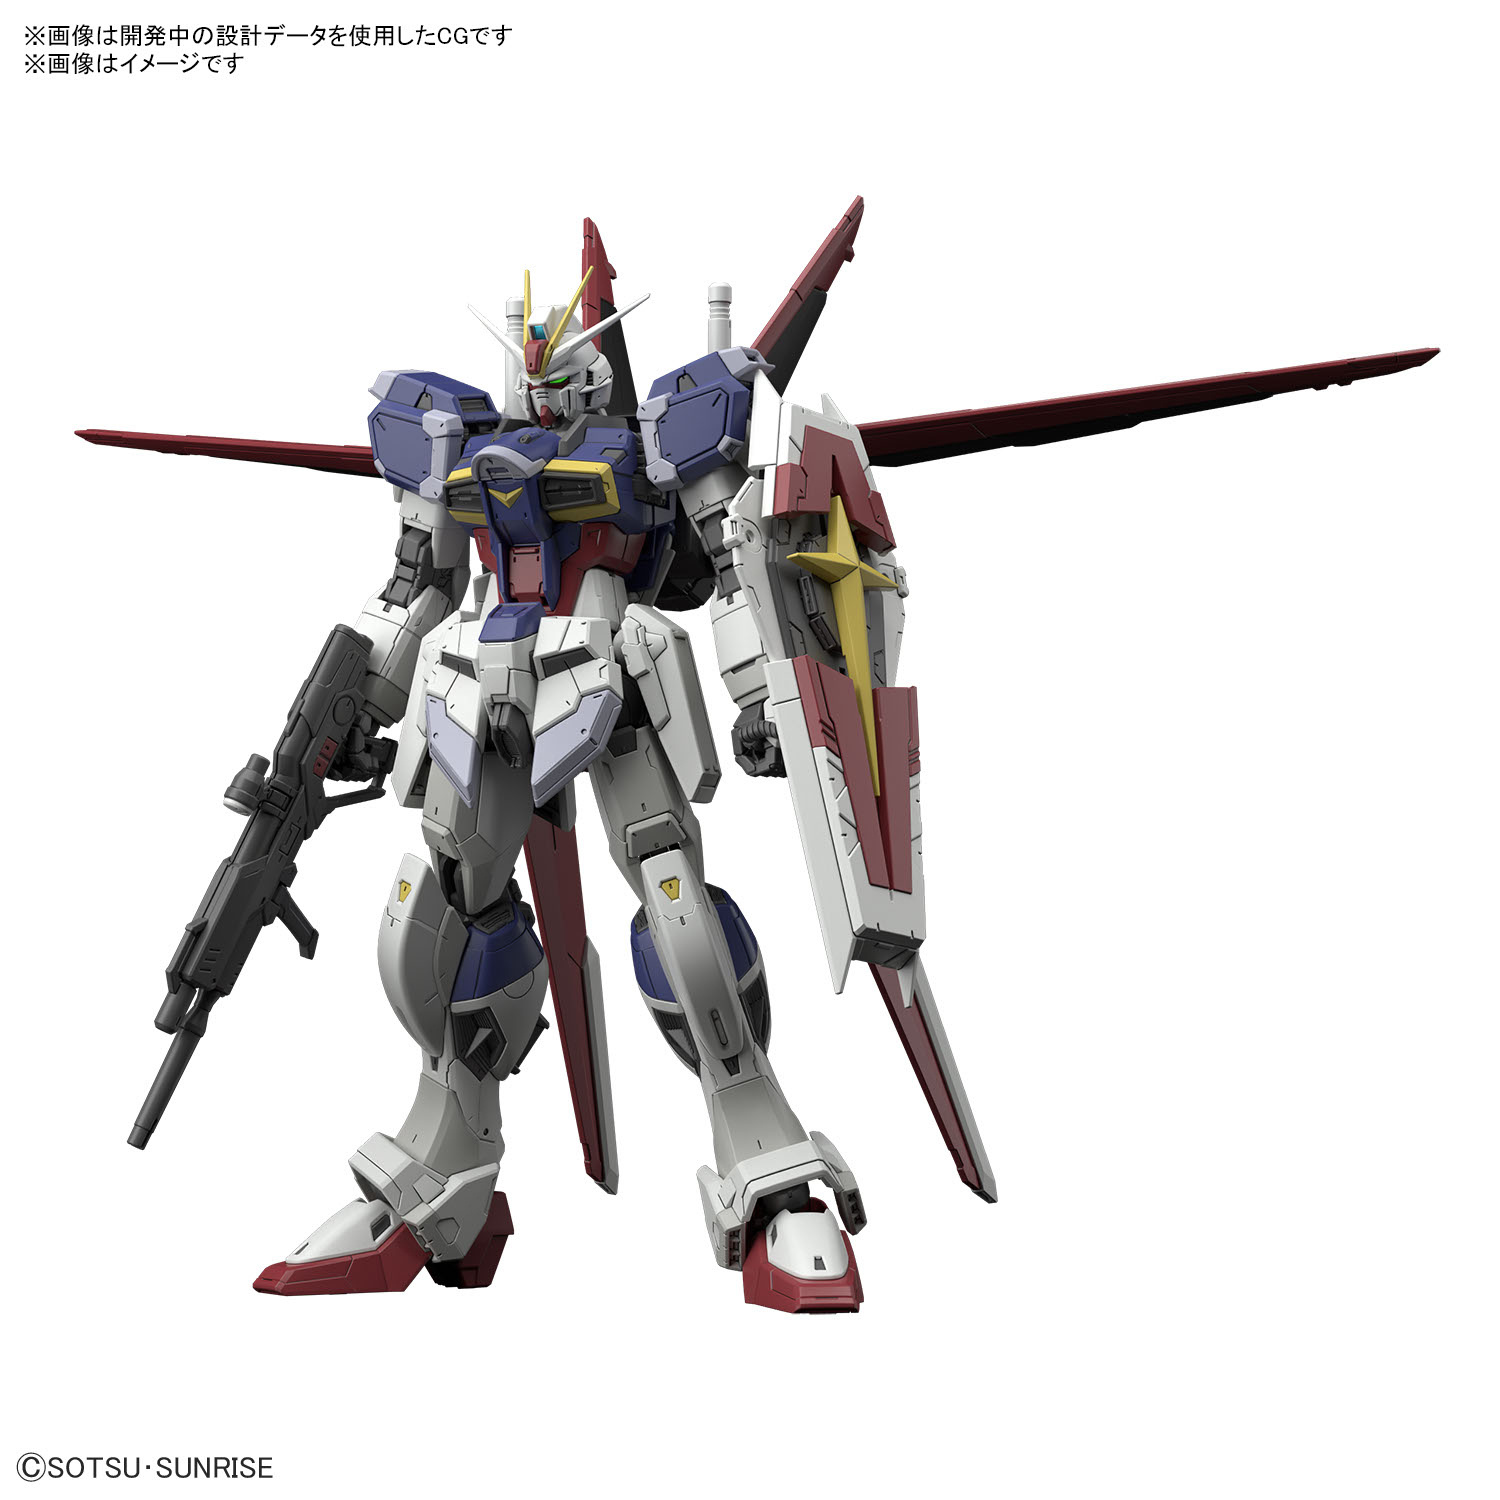 RG Force Impulse Gundam Spec II